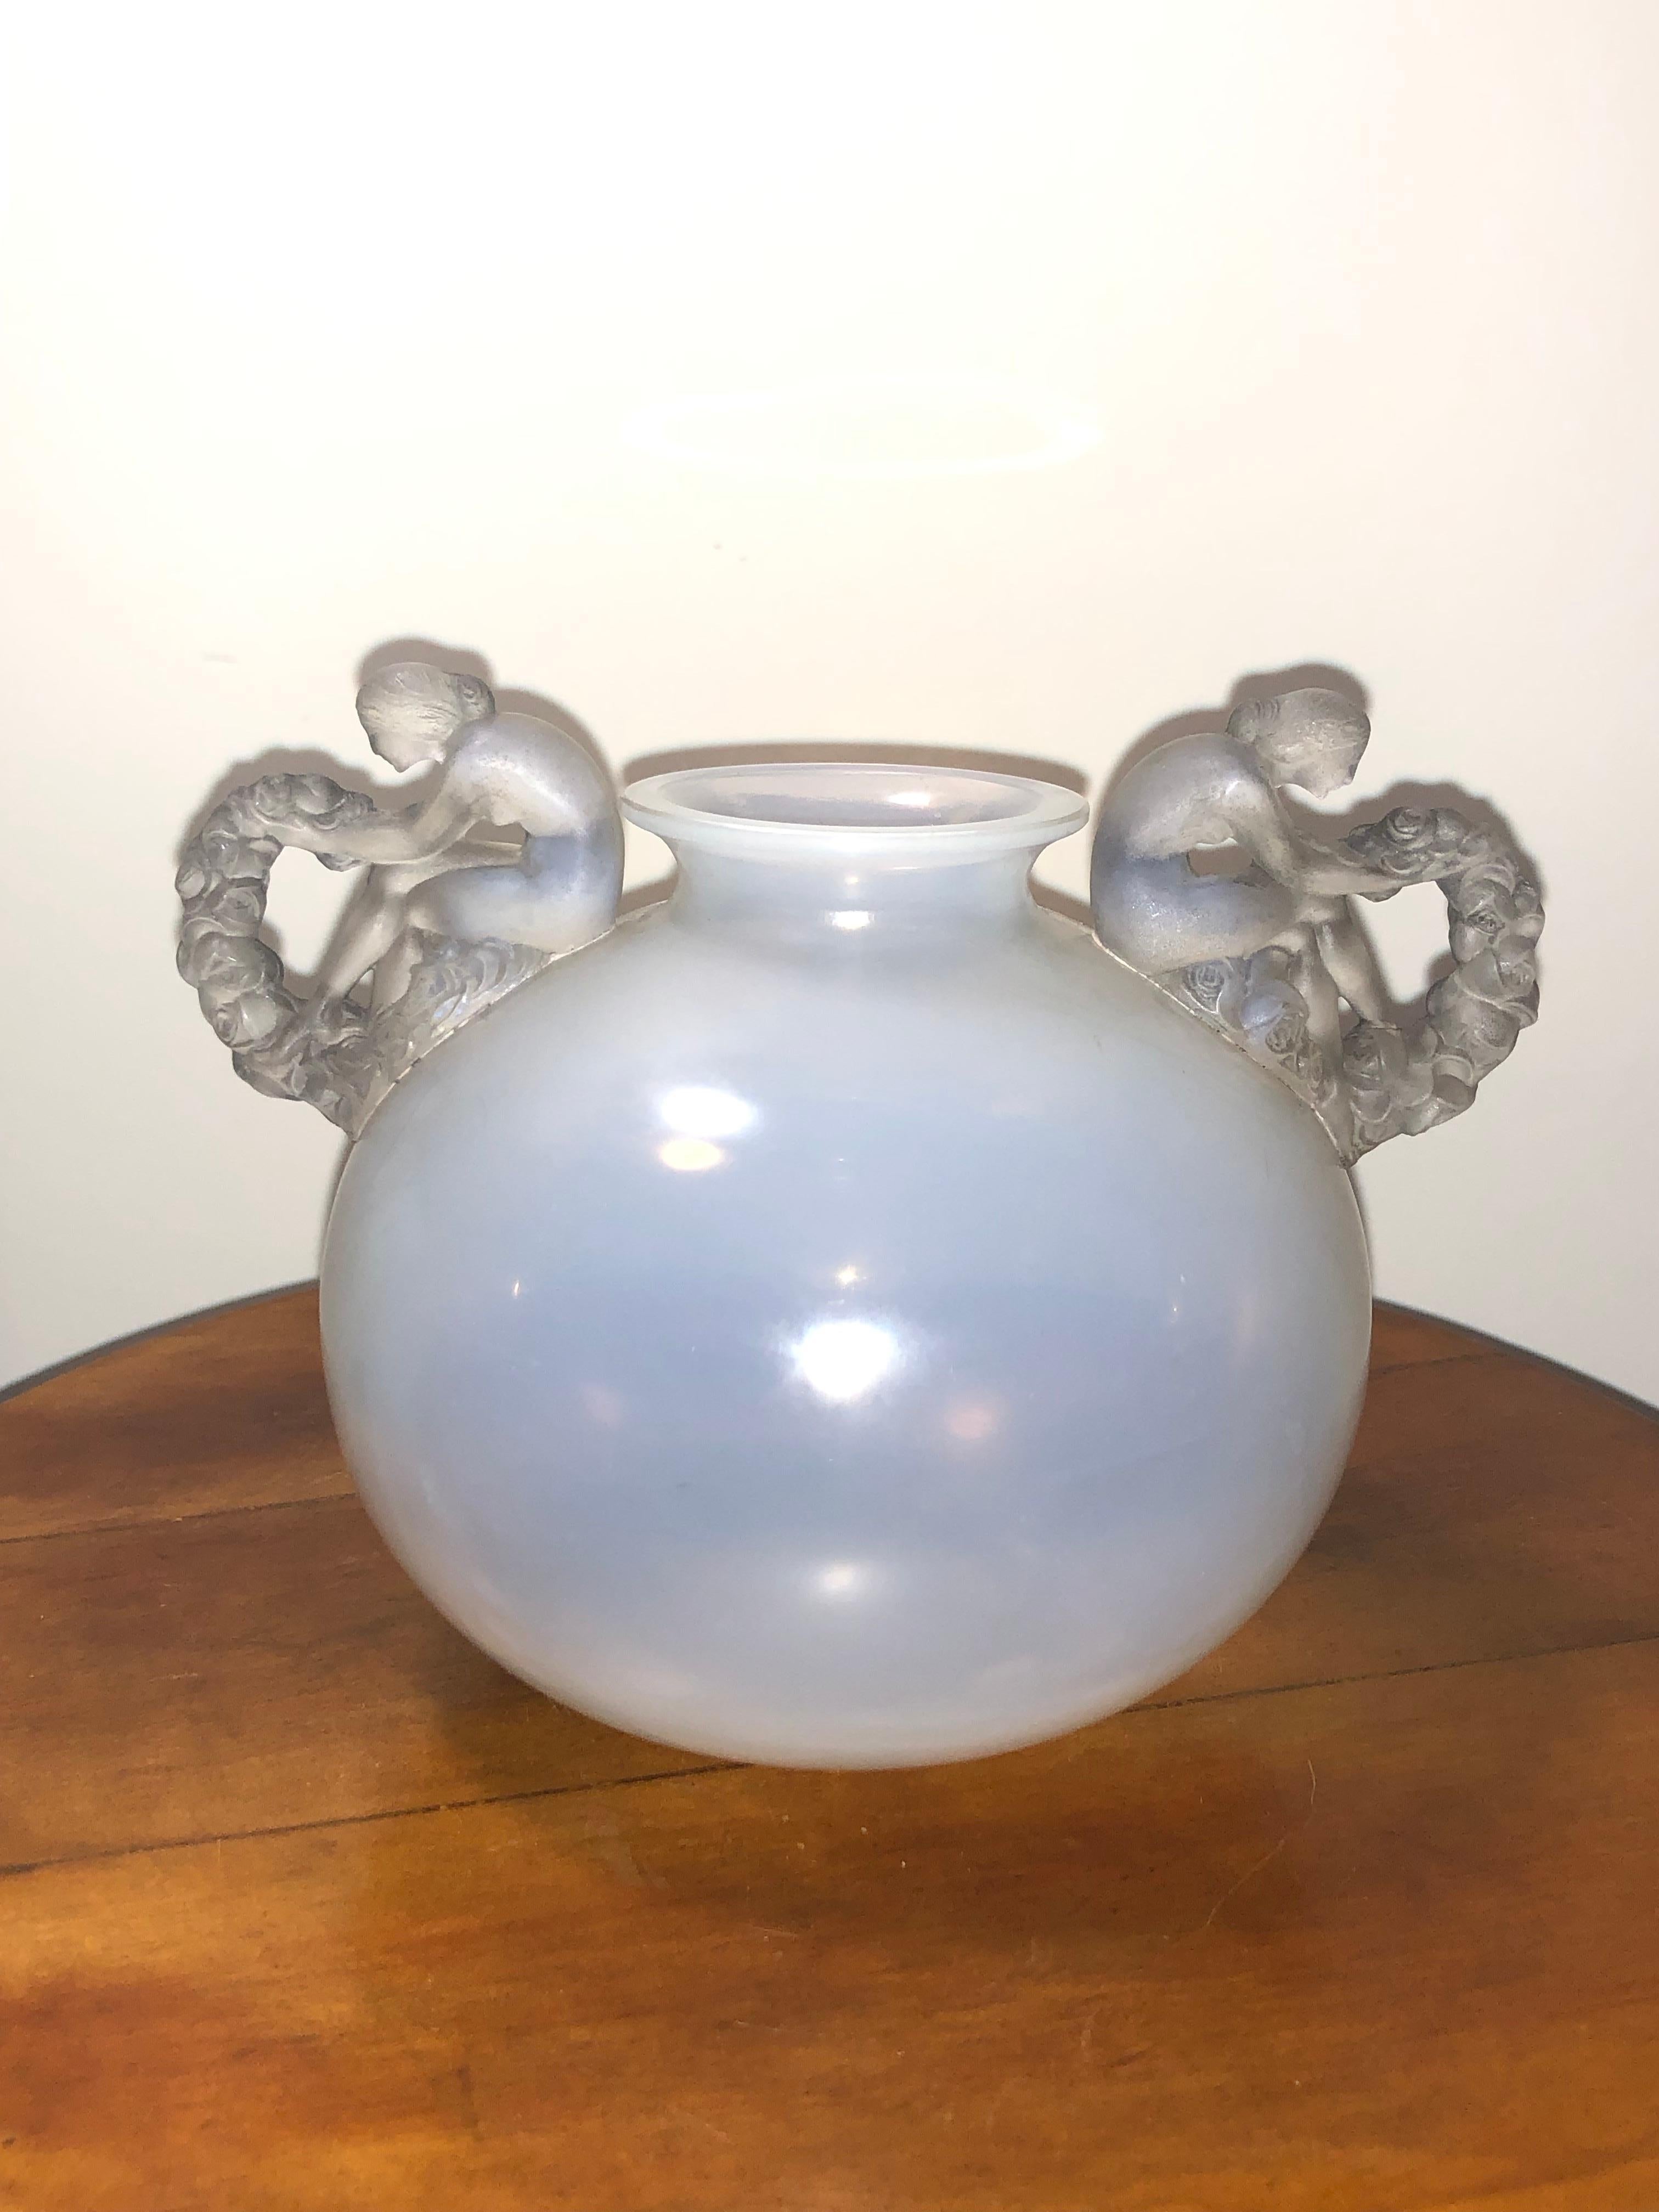 Molded 1926 René Lalique Bouchardon Handle Vase in Opalescent Glass, Women with Flowers